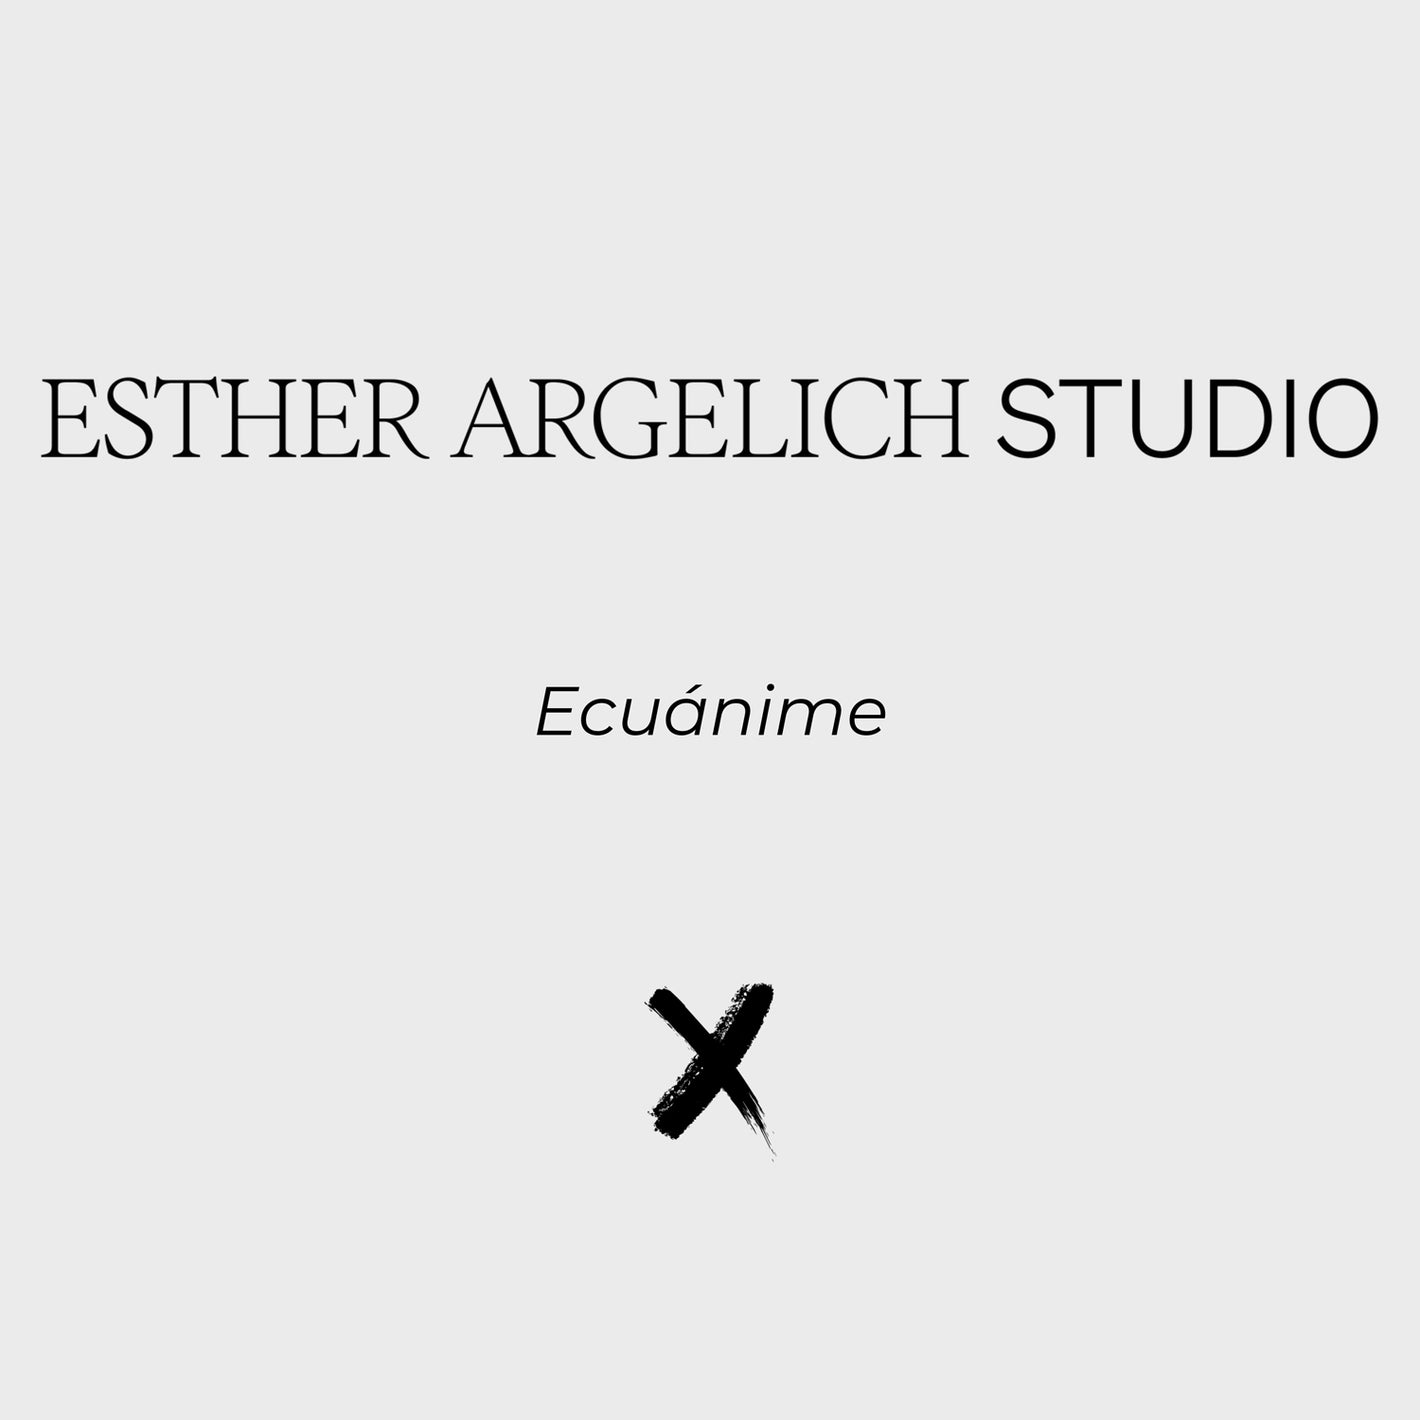 Esther Argelich studio in matiz gallery 2022